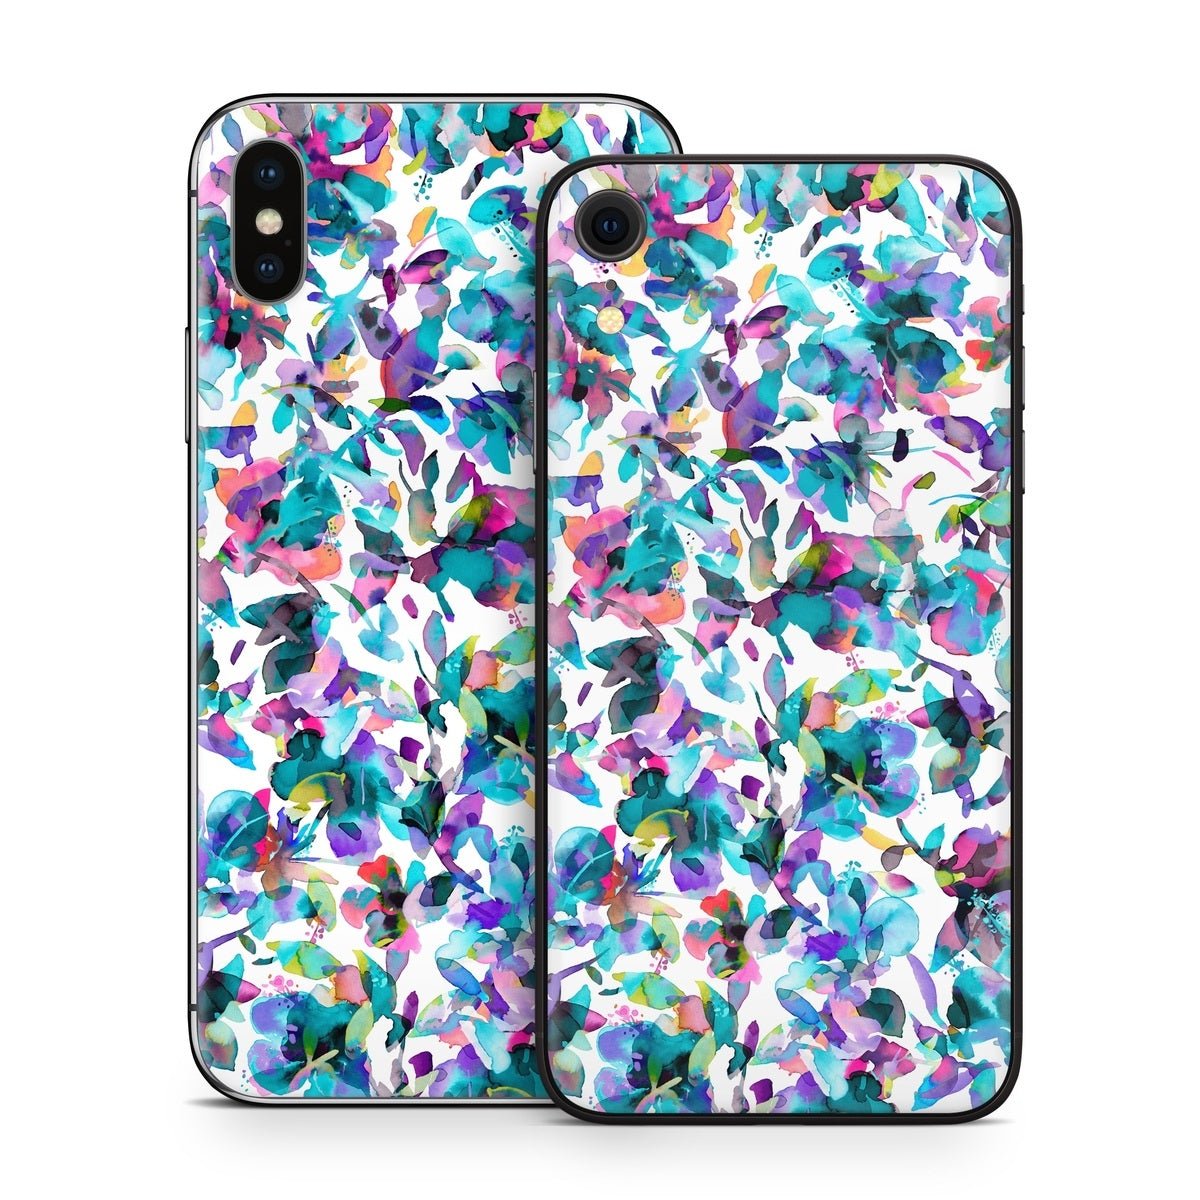 Aquatic Flowers - Apple iPhone X Skin - Ninola Design - DecalGirl